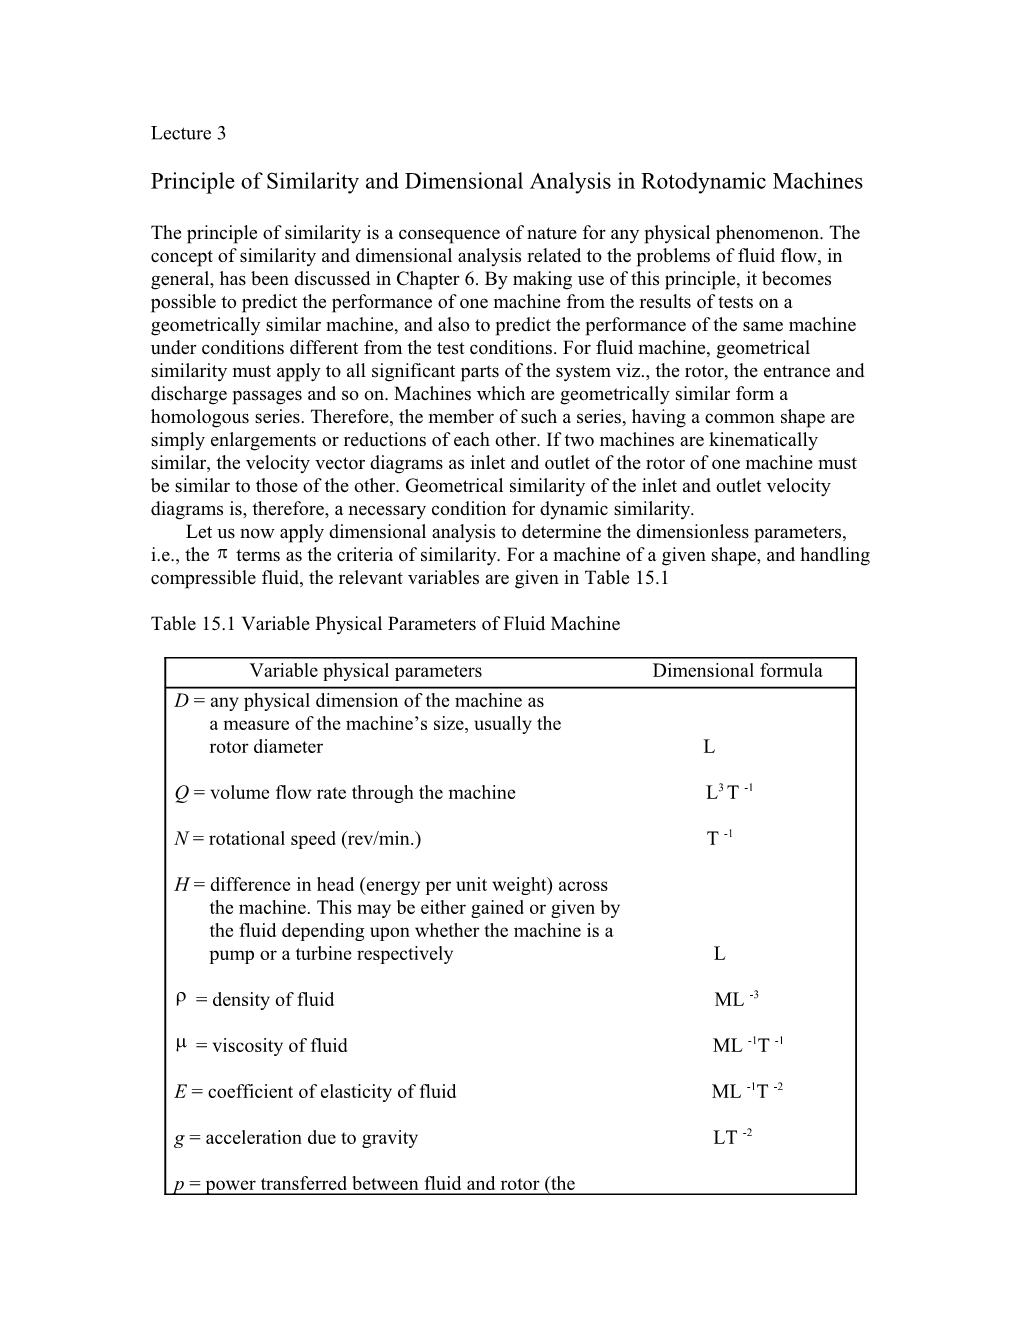 Principle of Similarity and Dimensional Analysis in Rotodynamic Machines